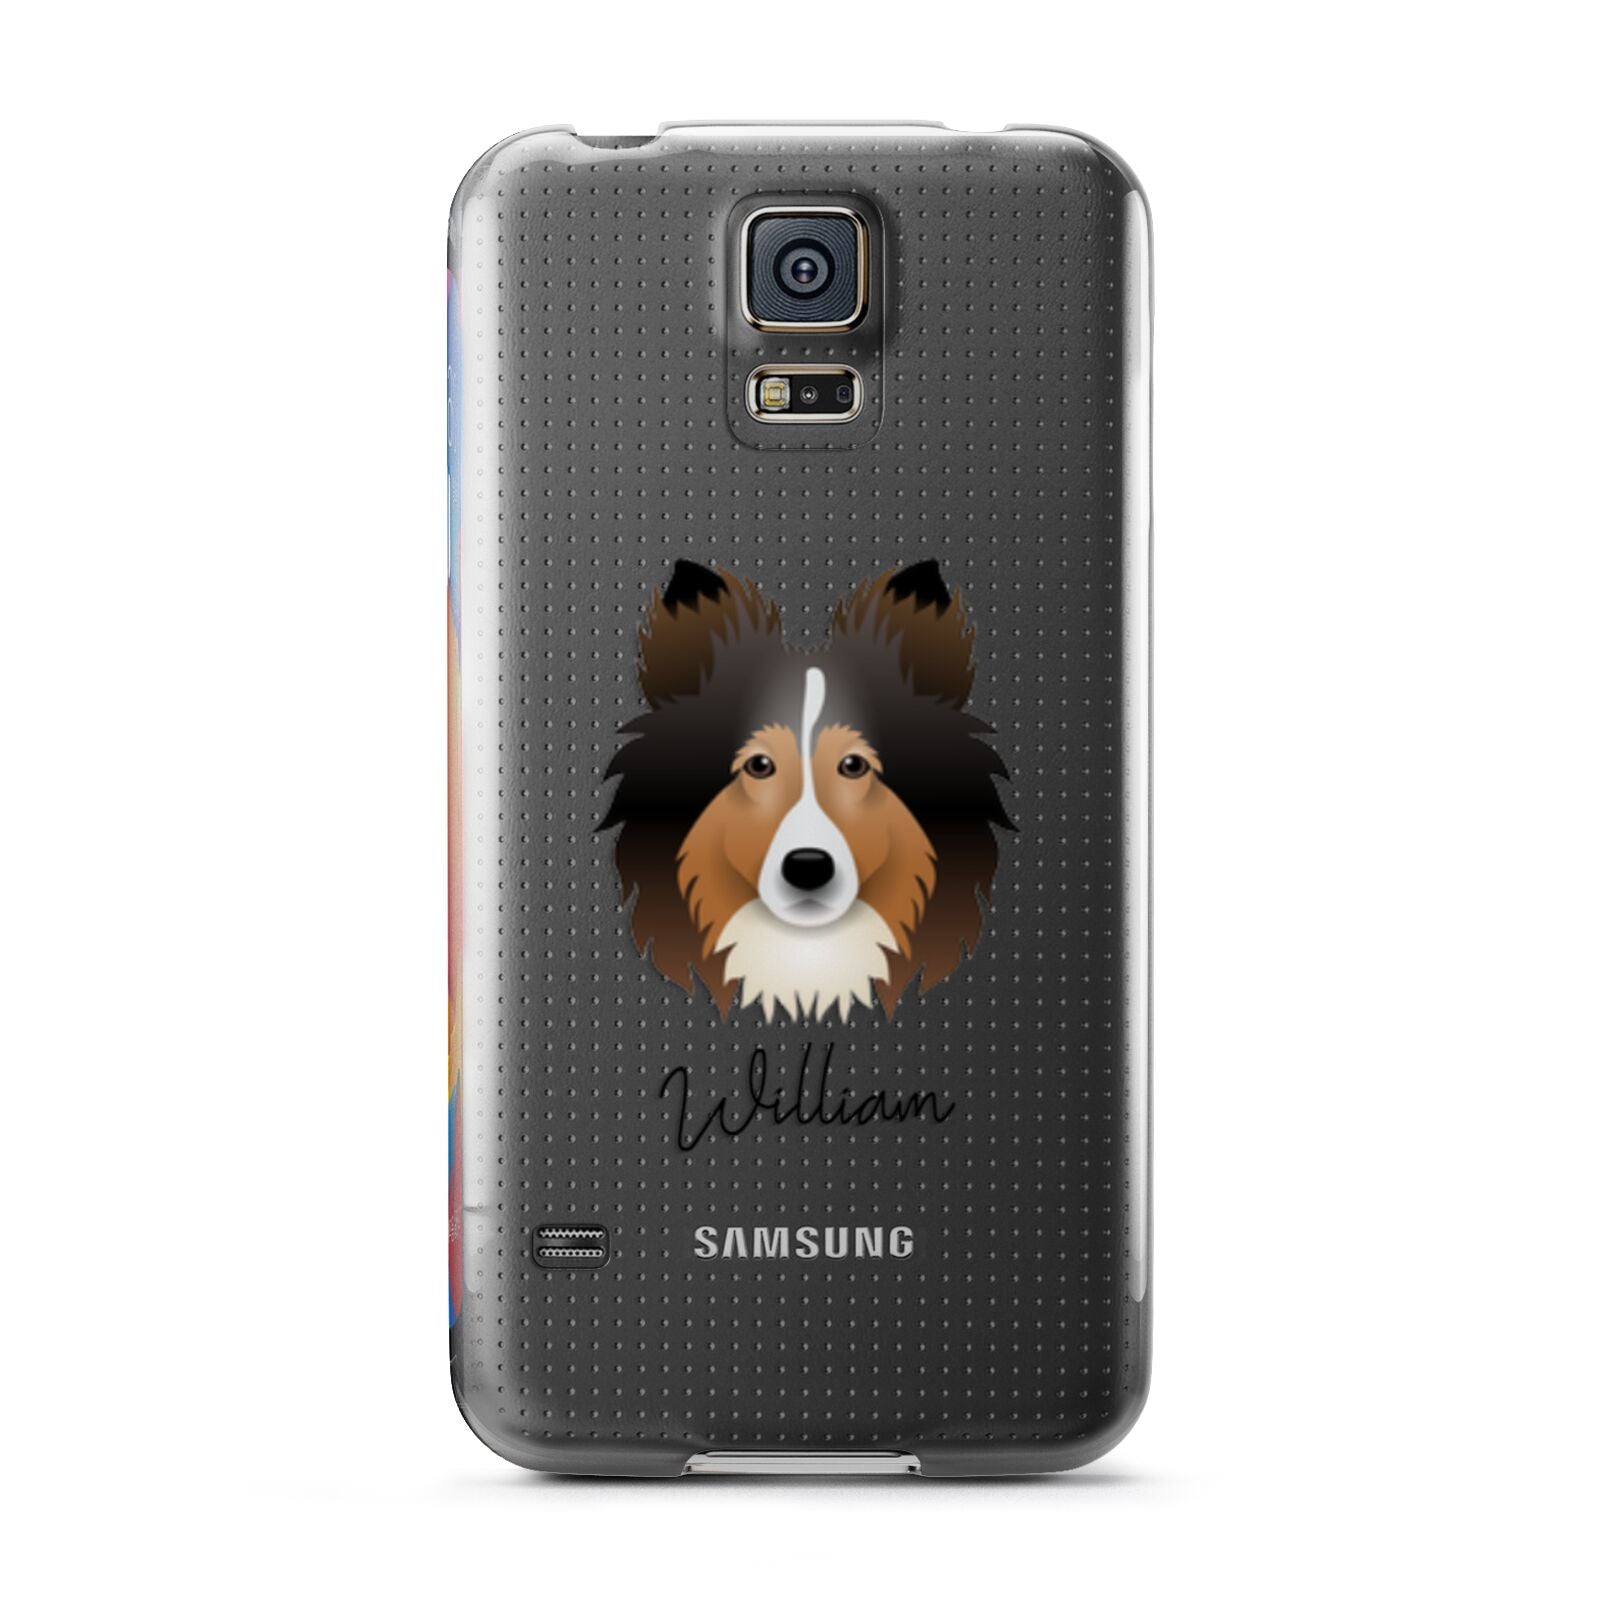 Shetland Sheepdog Personalised Samsung Galaxy S5 Case